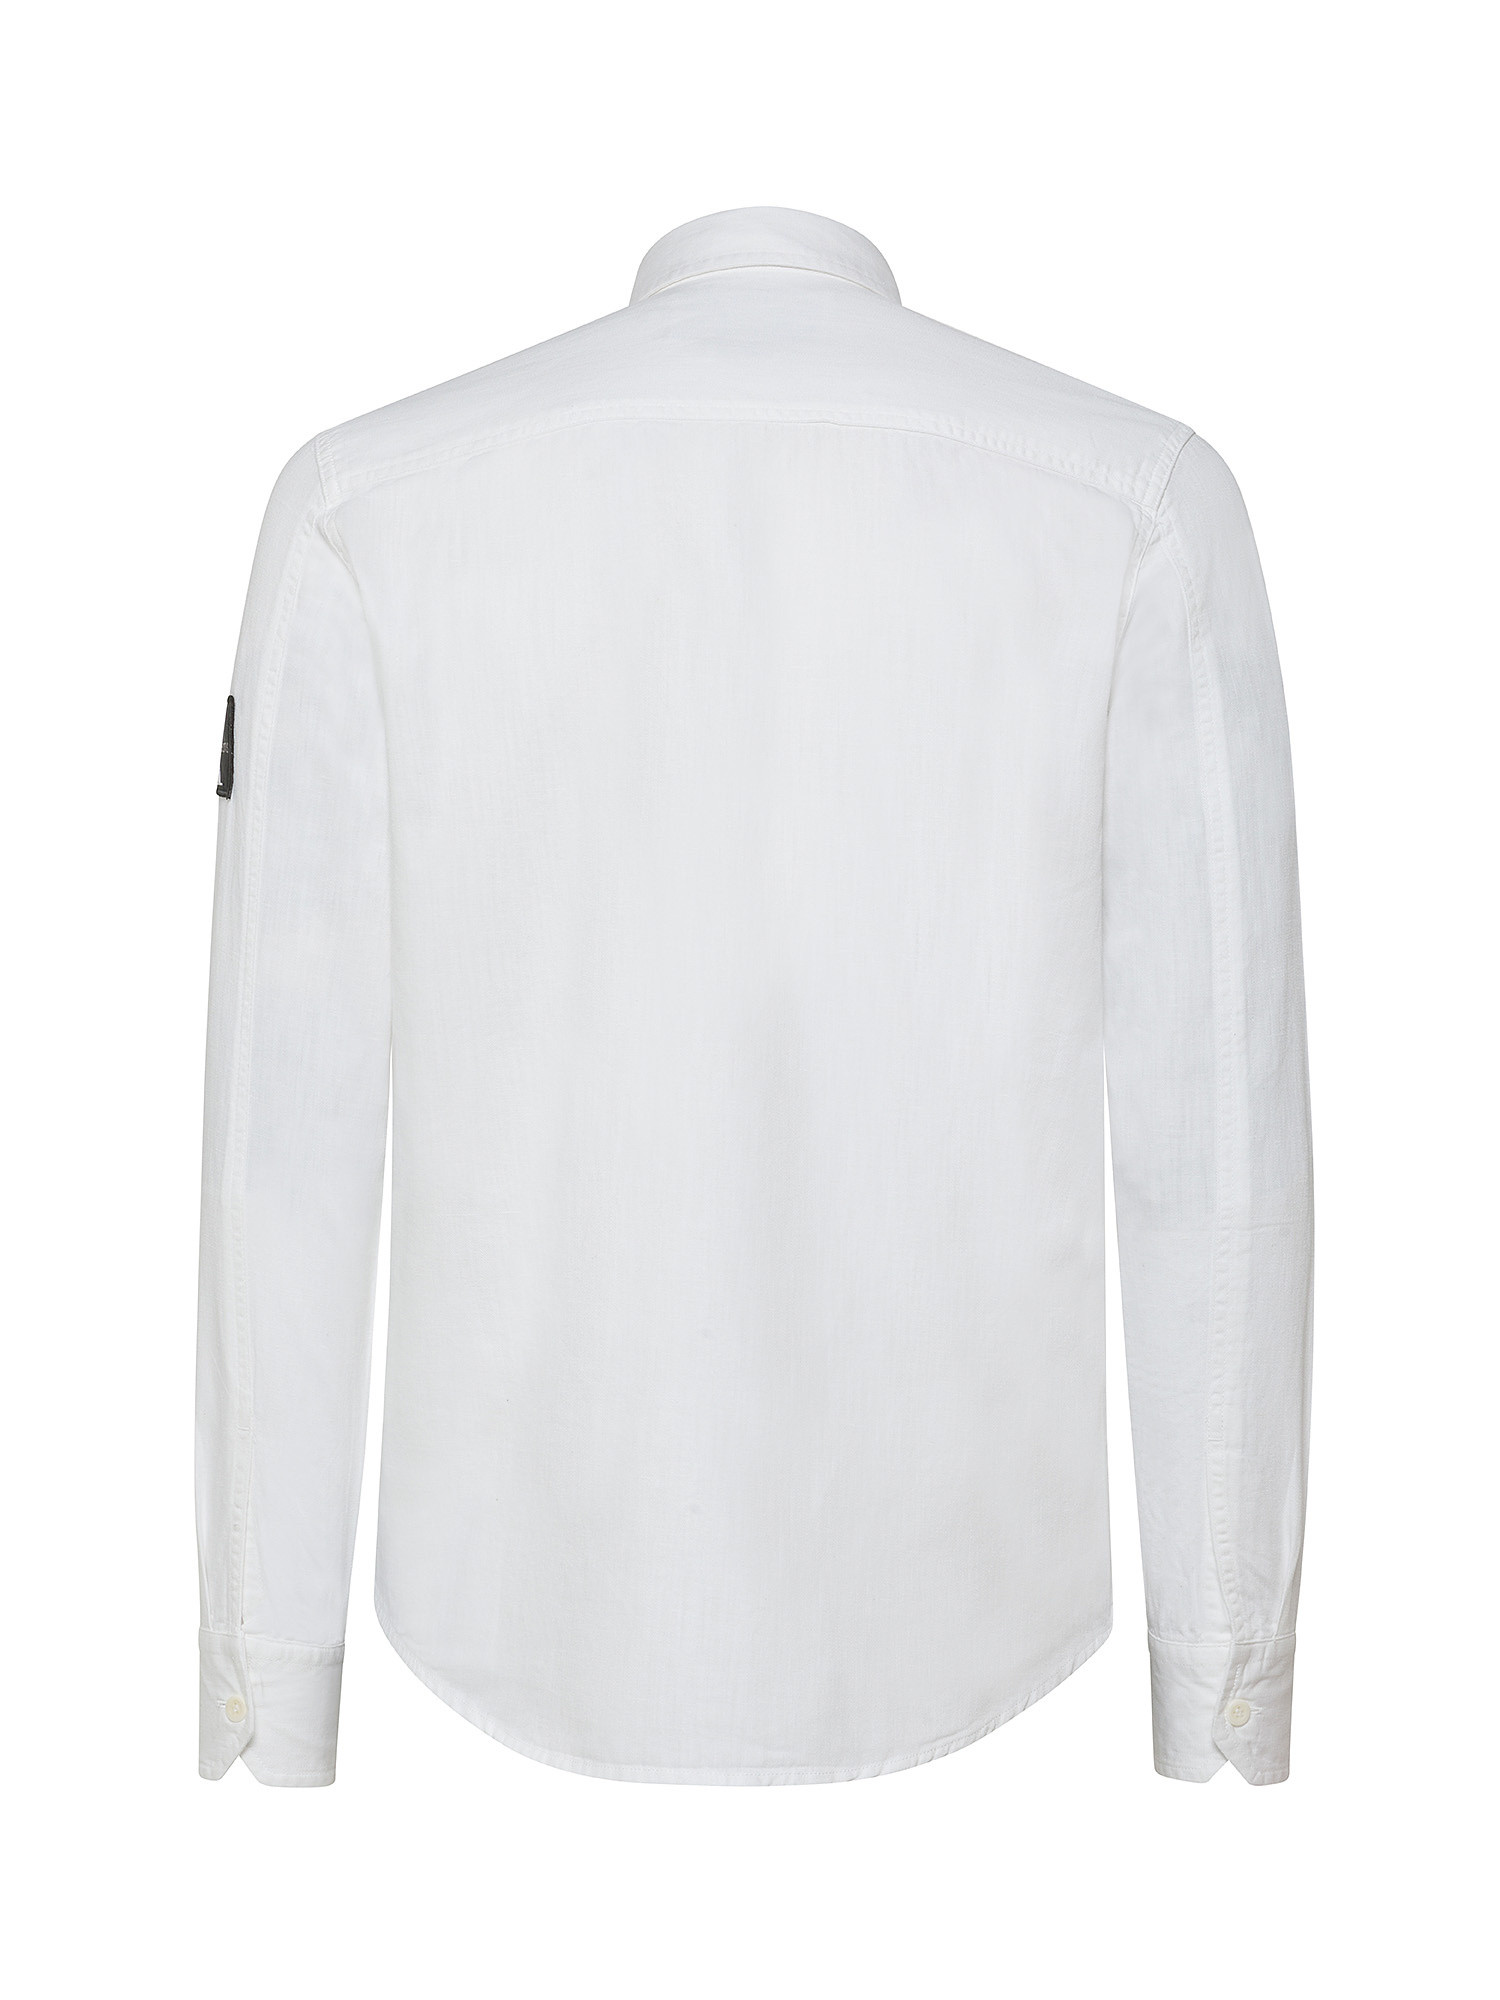 Calvin Klein Jeans - Camicia con doppia tasca, Bianco, large image number 1